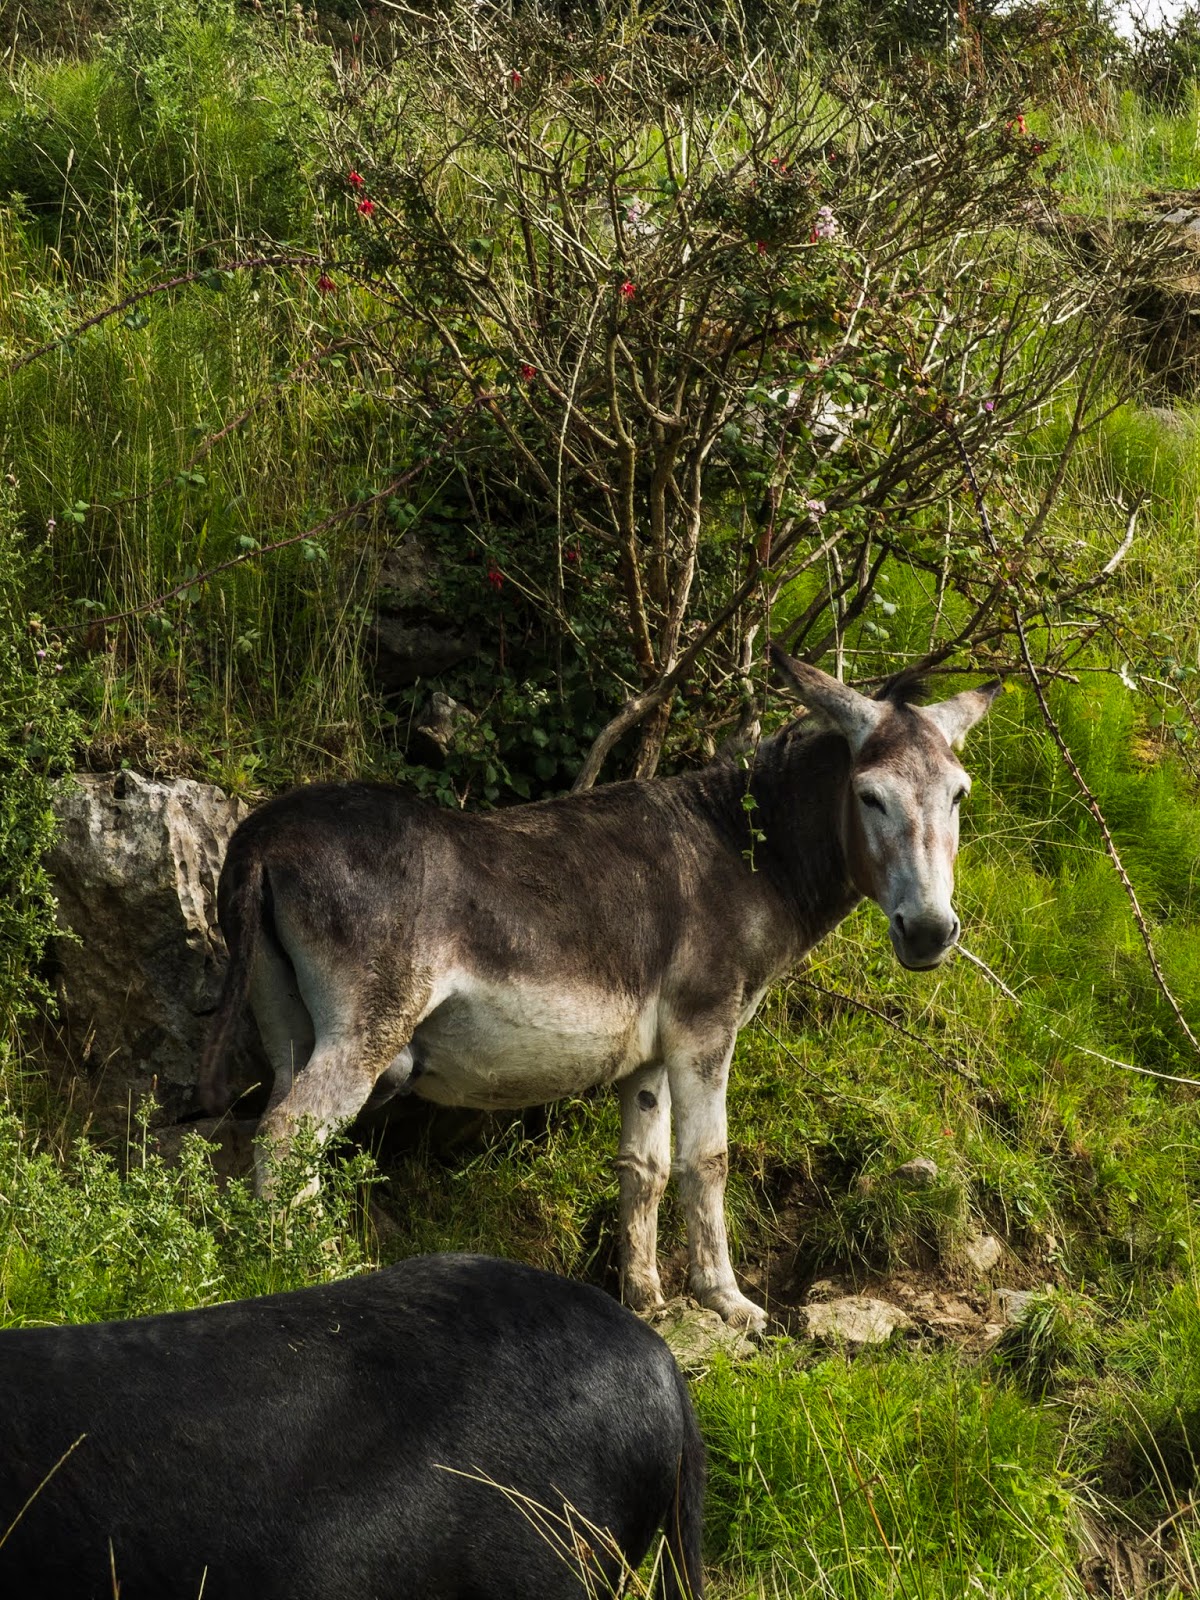 Donkey under a shrub on a hillside in Doolin, Co.Clare.